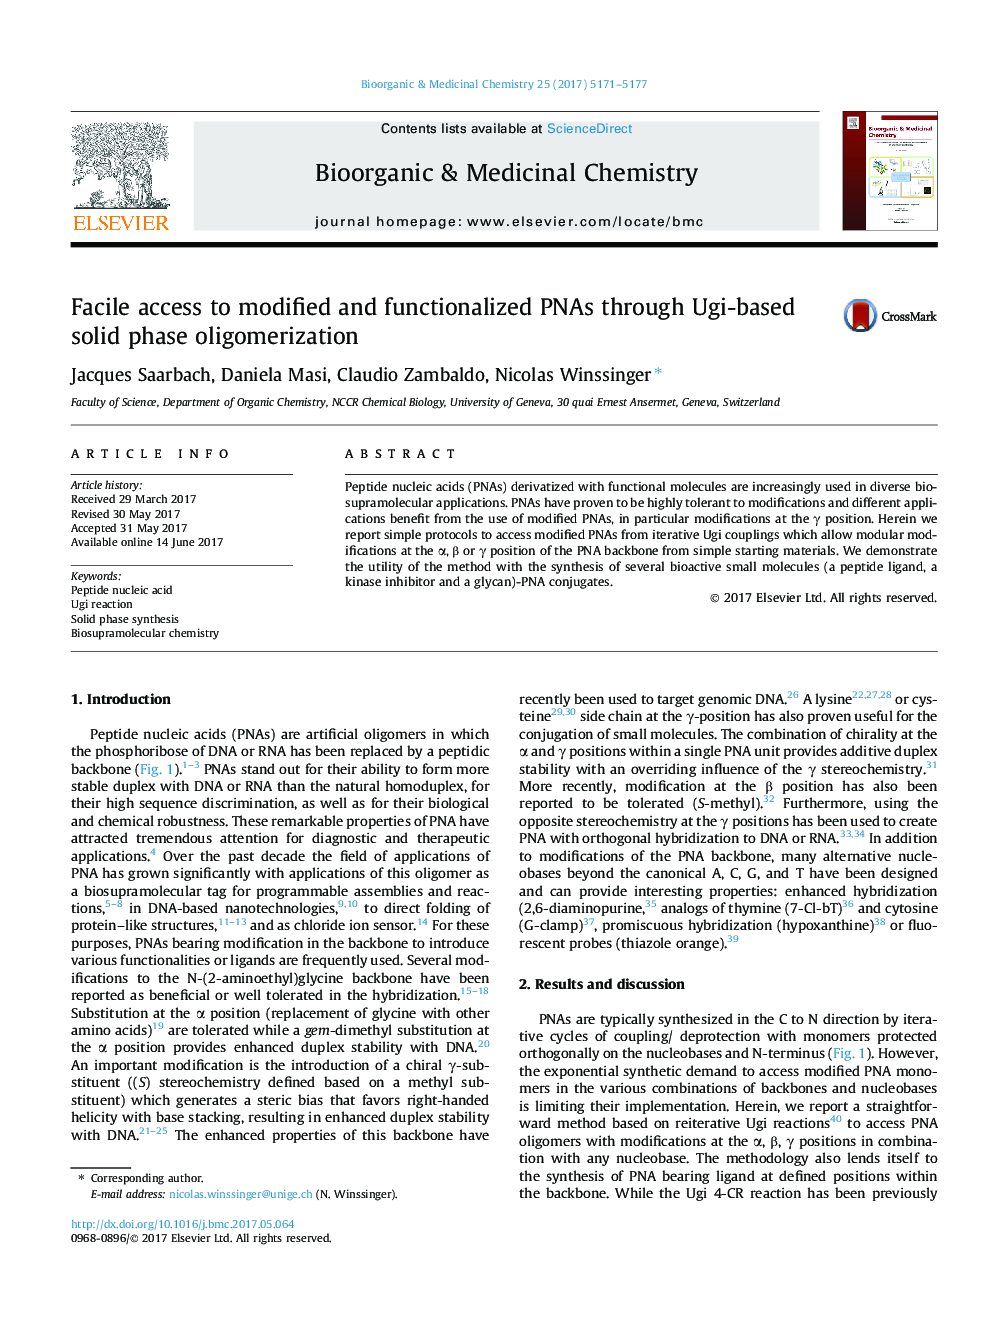 Facile access to modified and functionalized PNAs through Ugi-based solid phase oligomerization